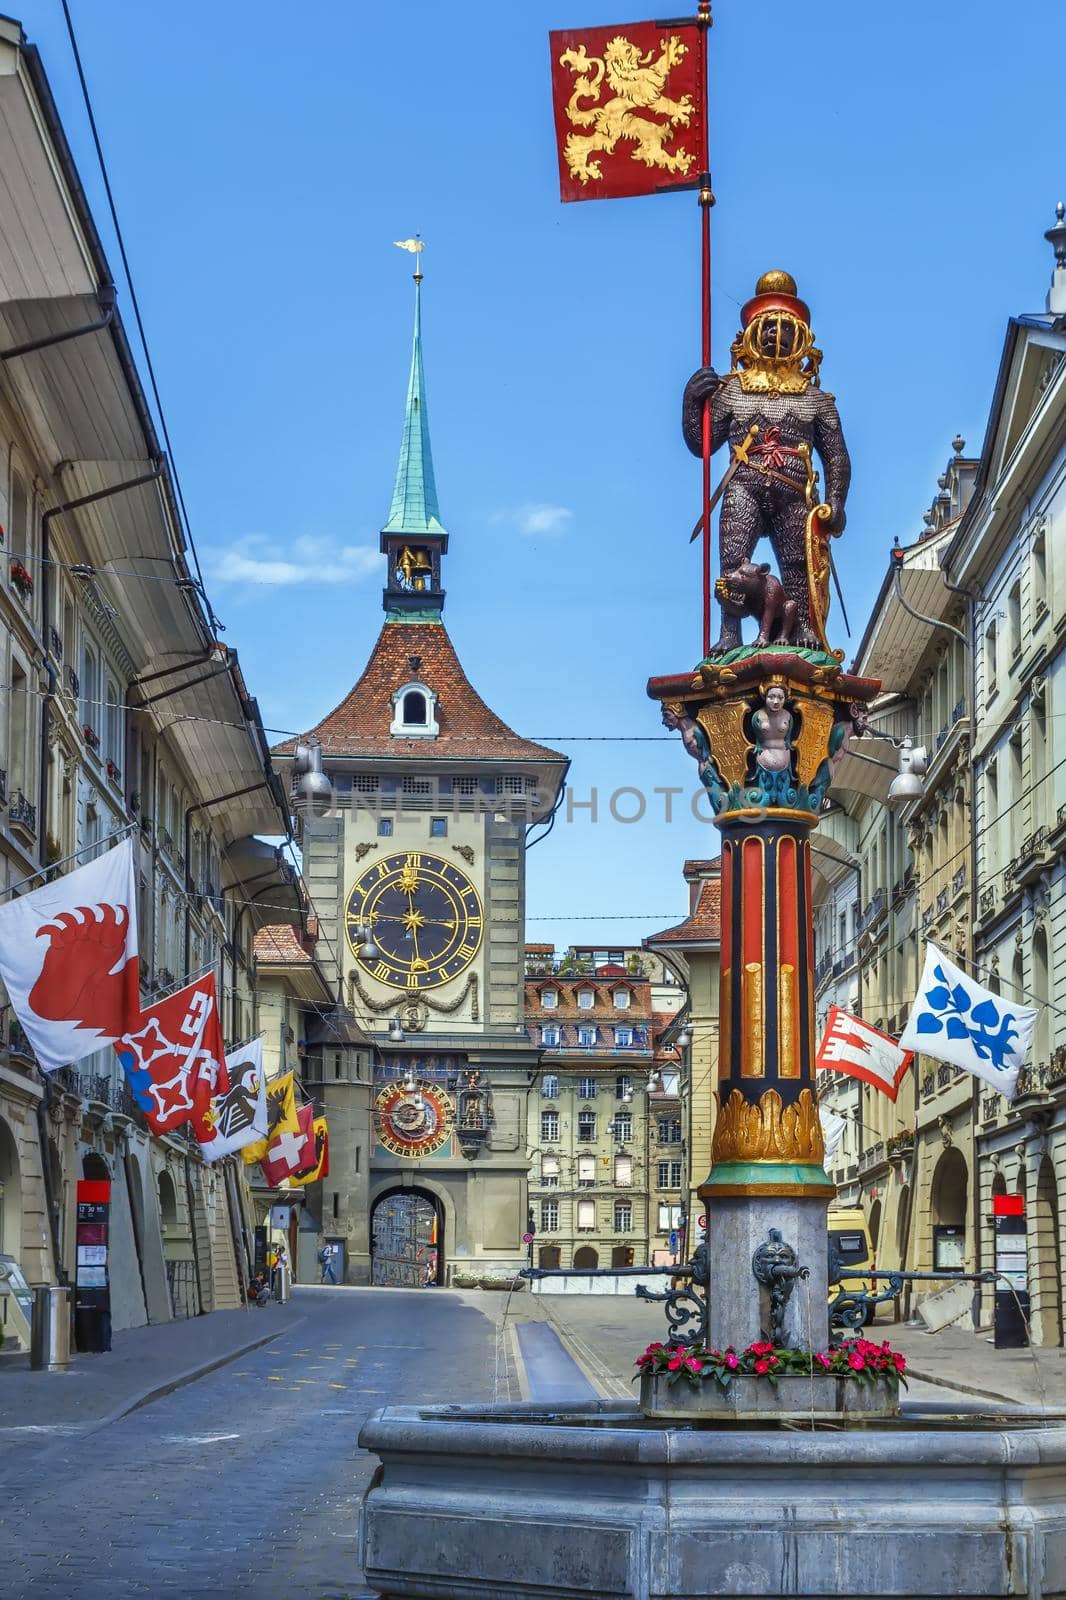 Zahringerbrunnen (Zahringen Fountain)  and Zytglogge tower in Bern downtown, Switzerland